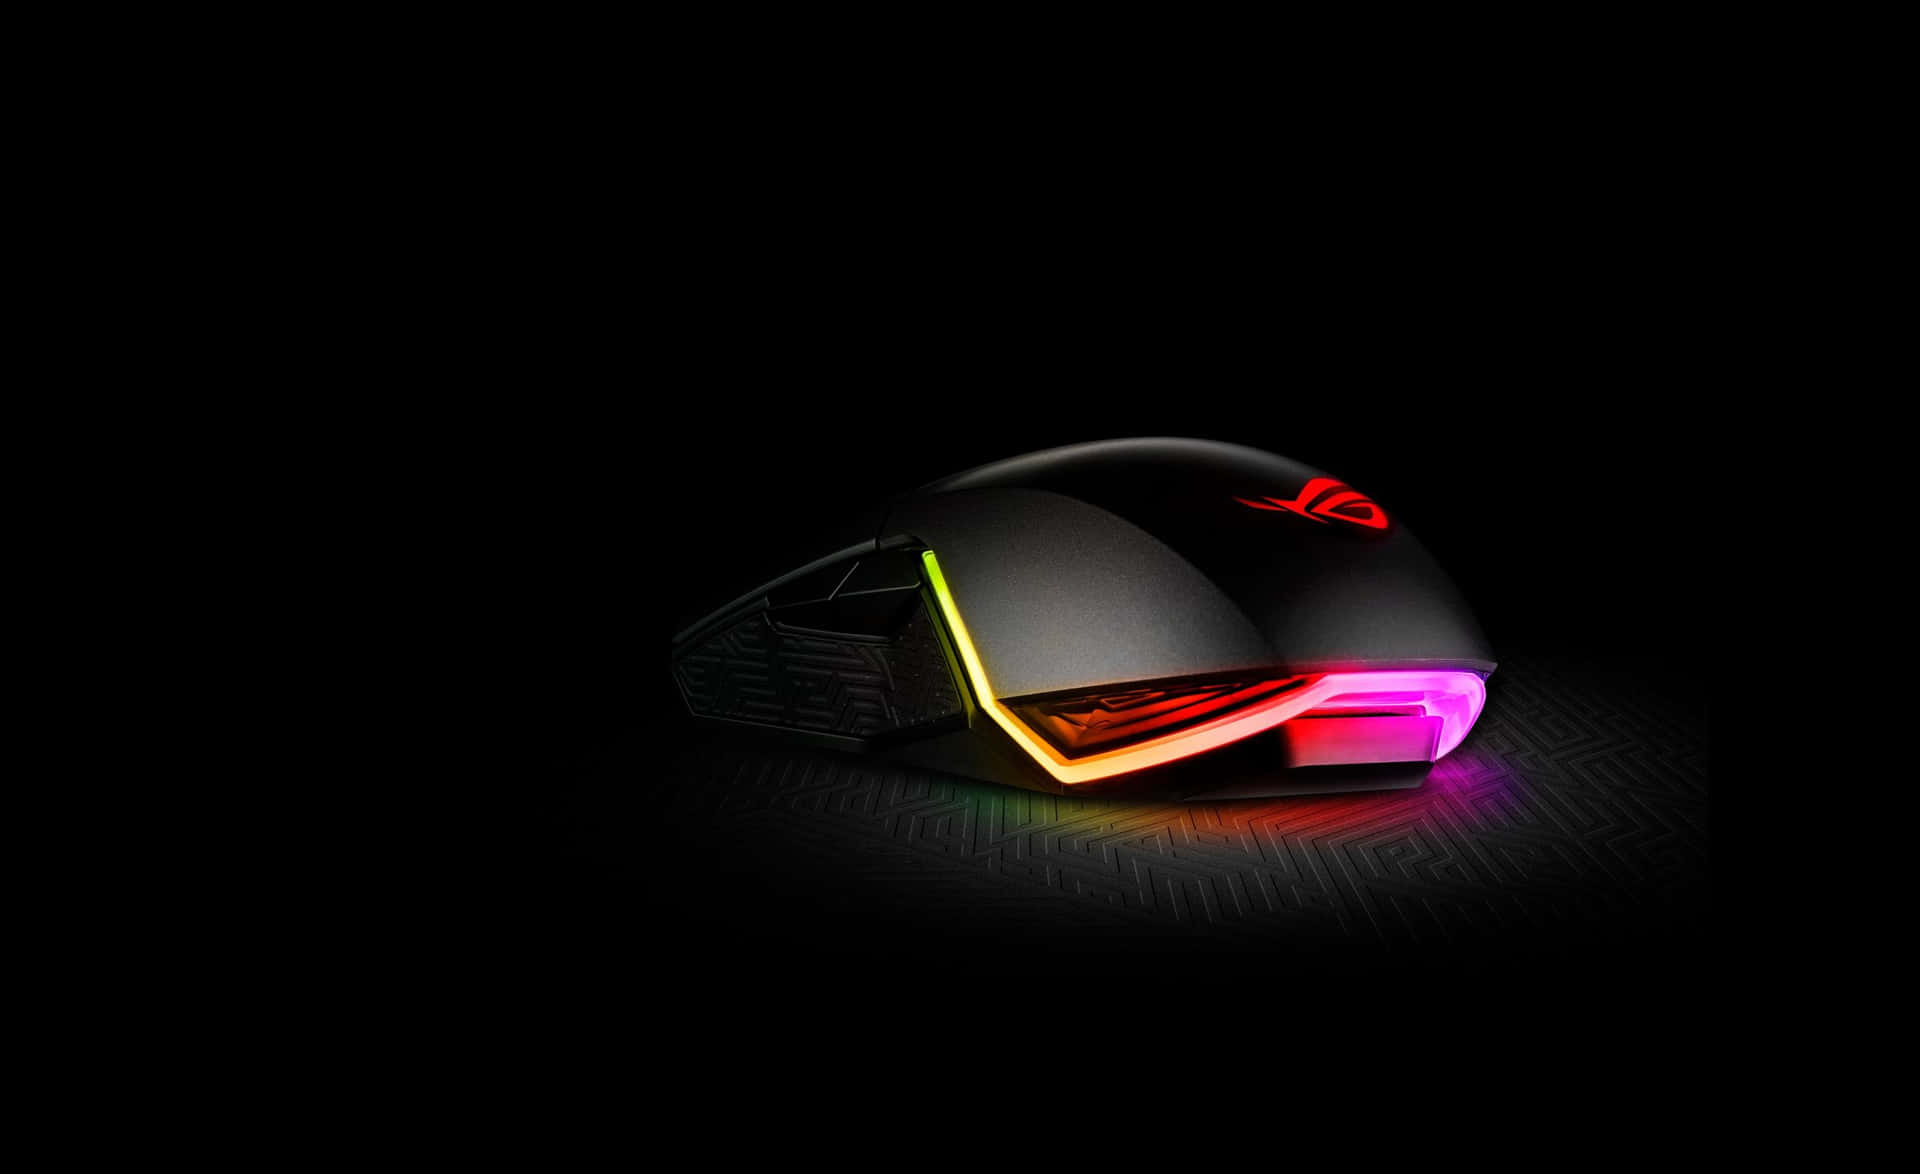 Sleek Gaming Mouse Illuminated in Neon Lights Wallpaper